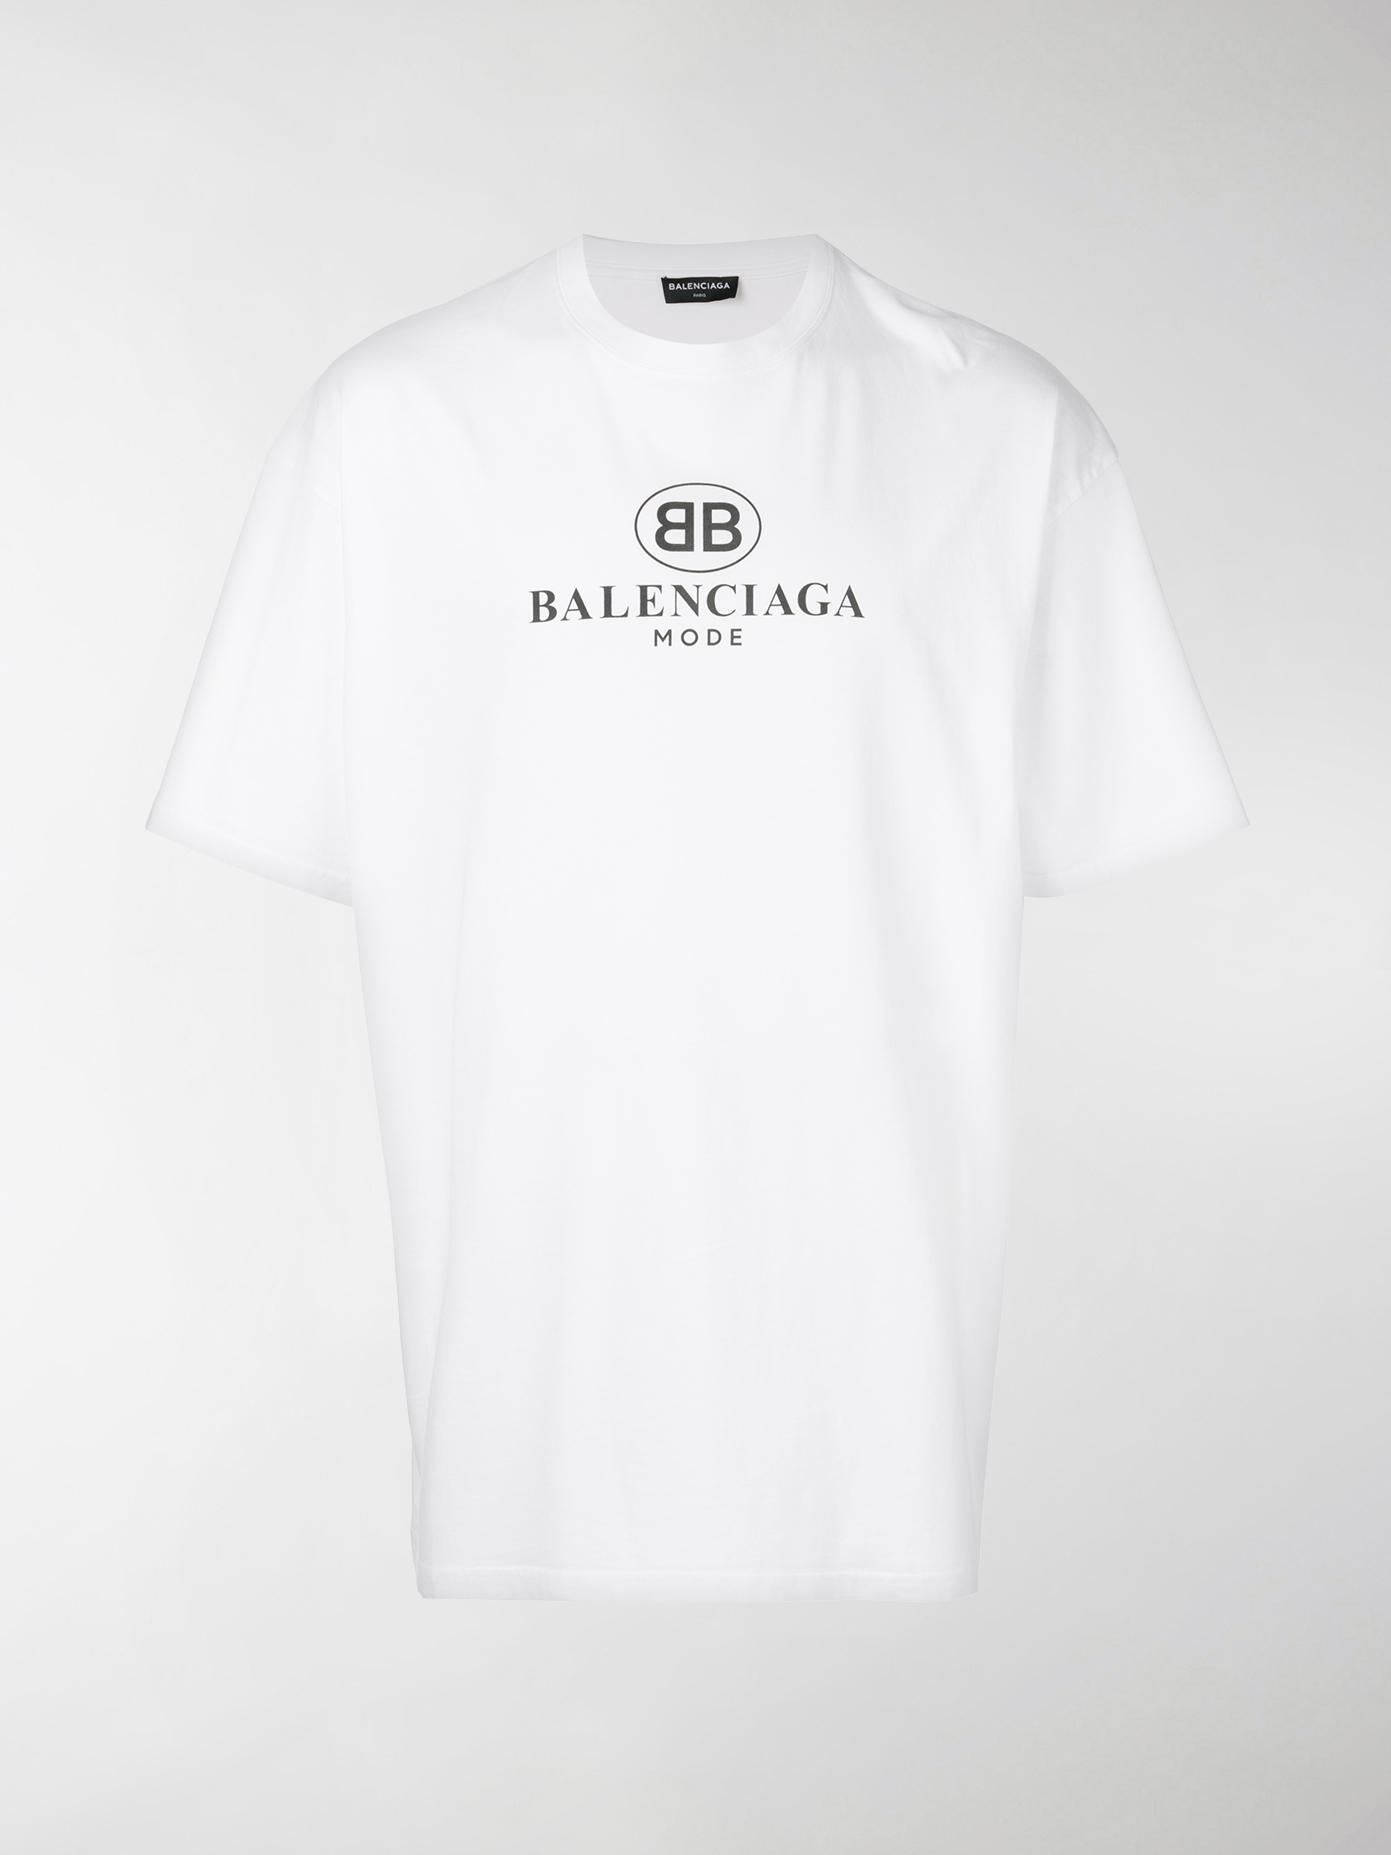 Balenciaga Cotton Logo T-shirt in White for Men - Lyst